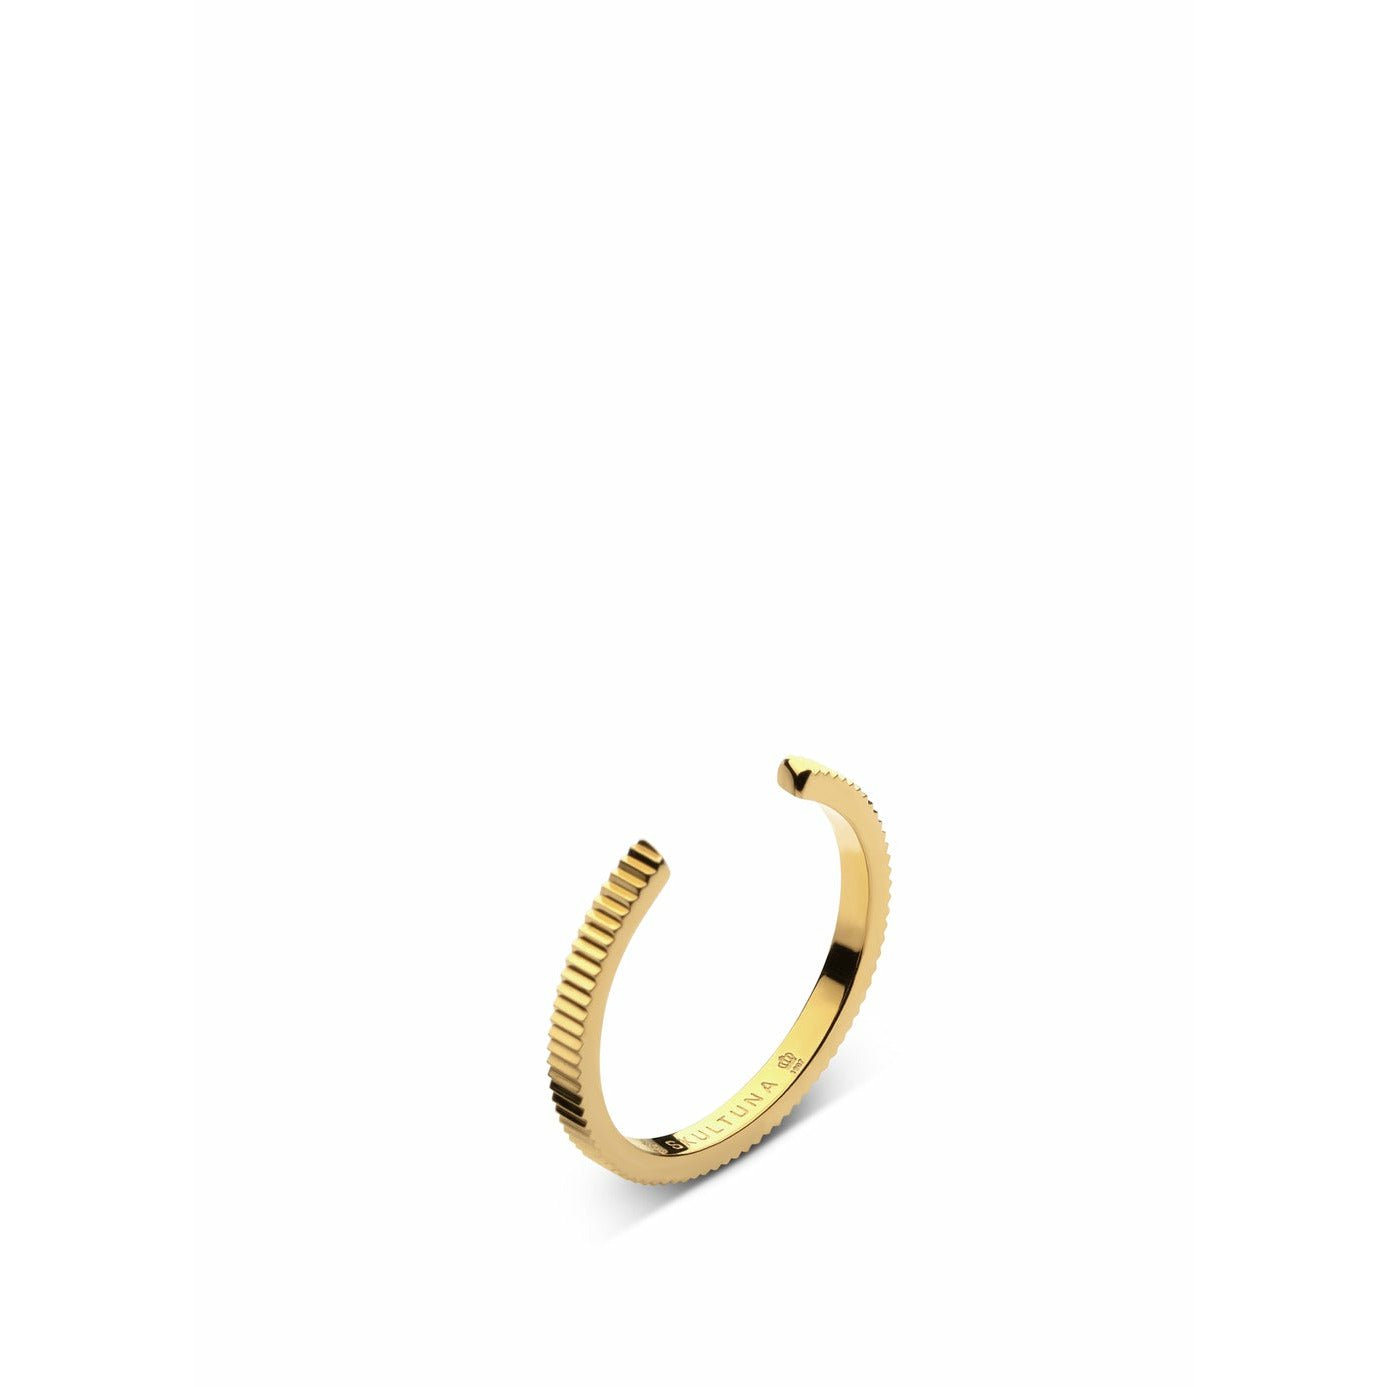 Skultuna gerippter dünner Ring kleiner 316 l Stahl Gold plattiert, Ø1,6 cm